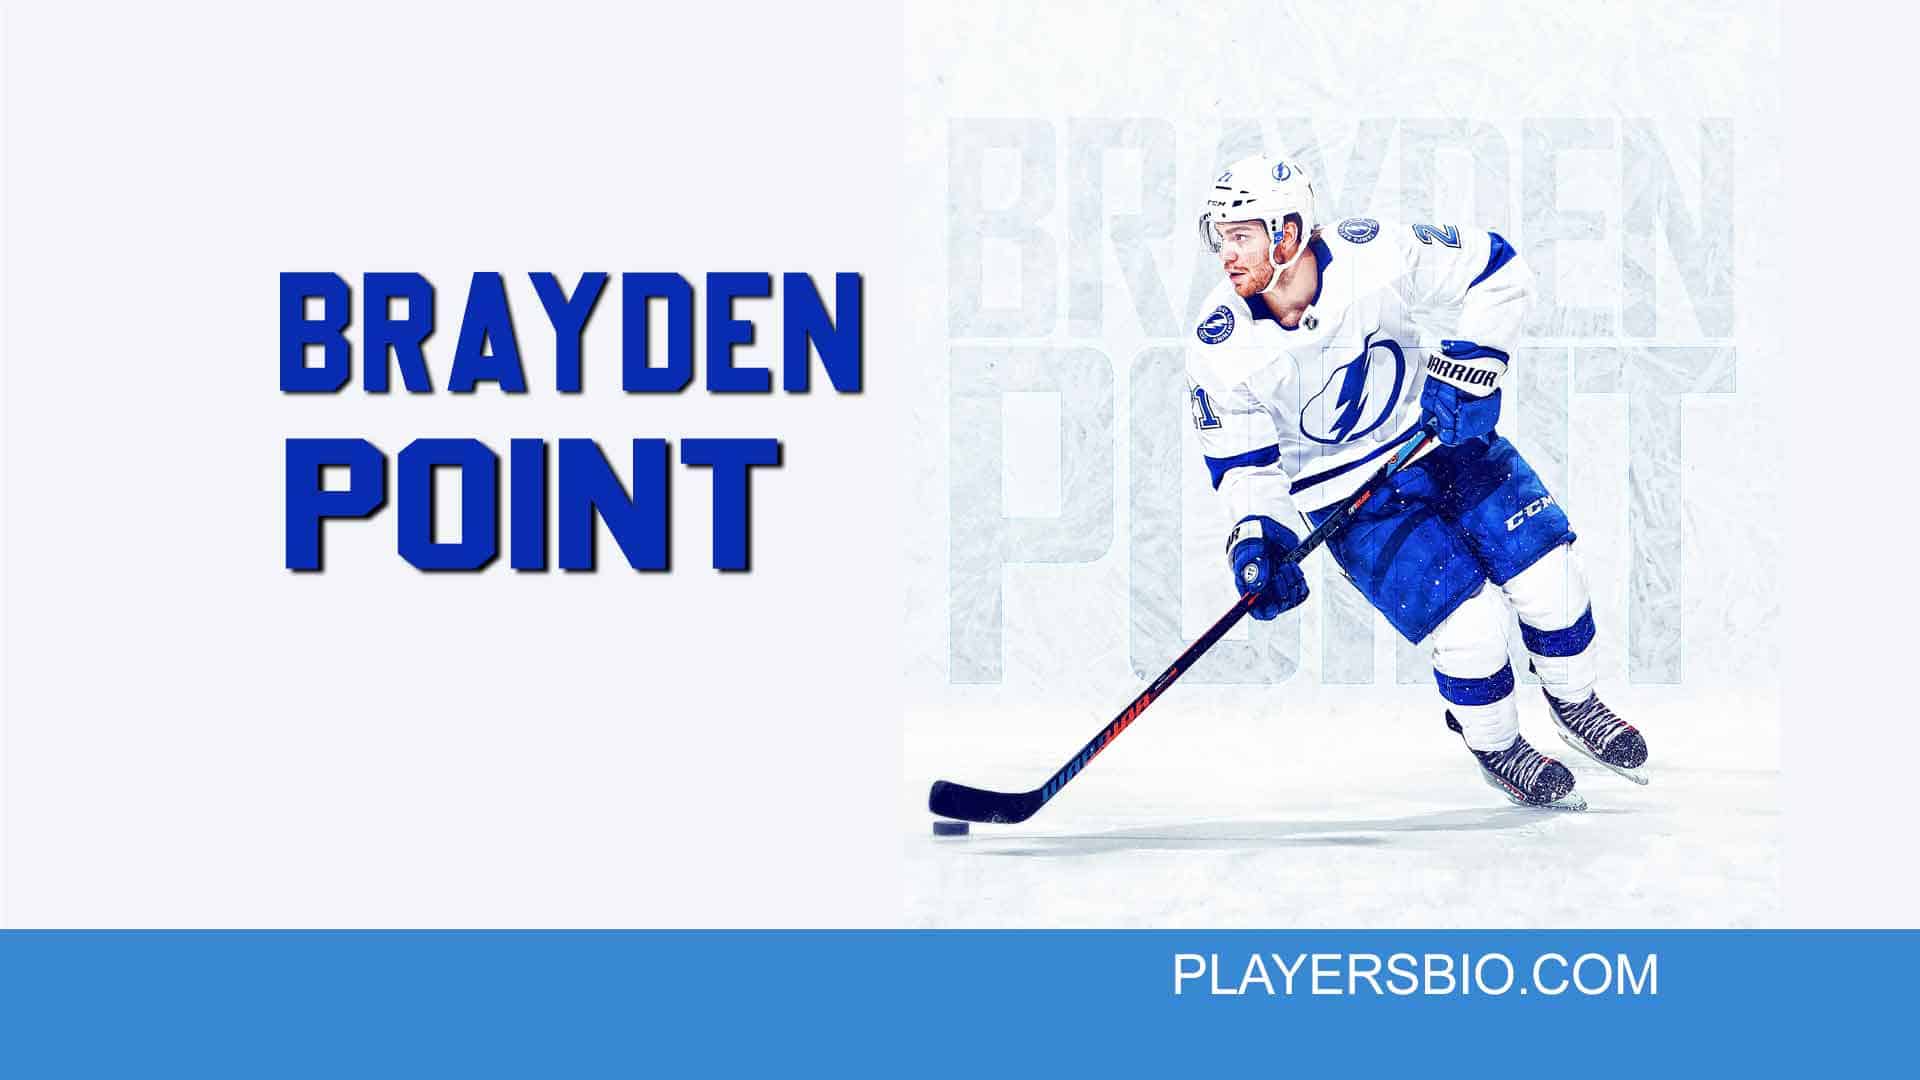 Download Tampa Bay Lightning Superstars – Brayden Point and Ondrej